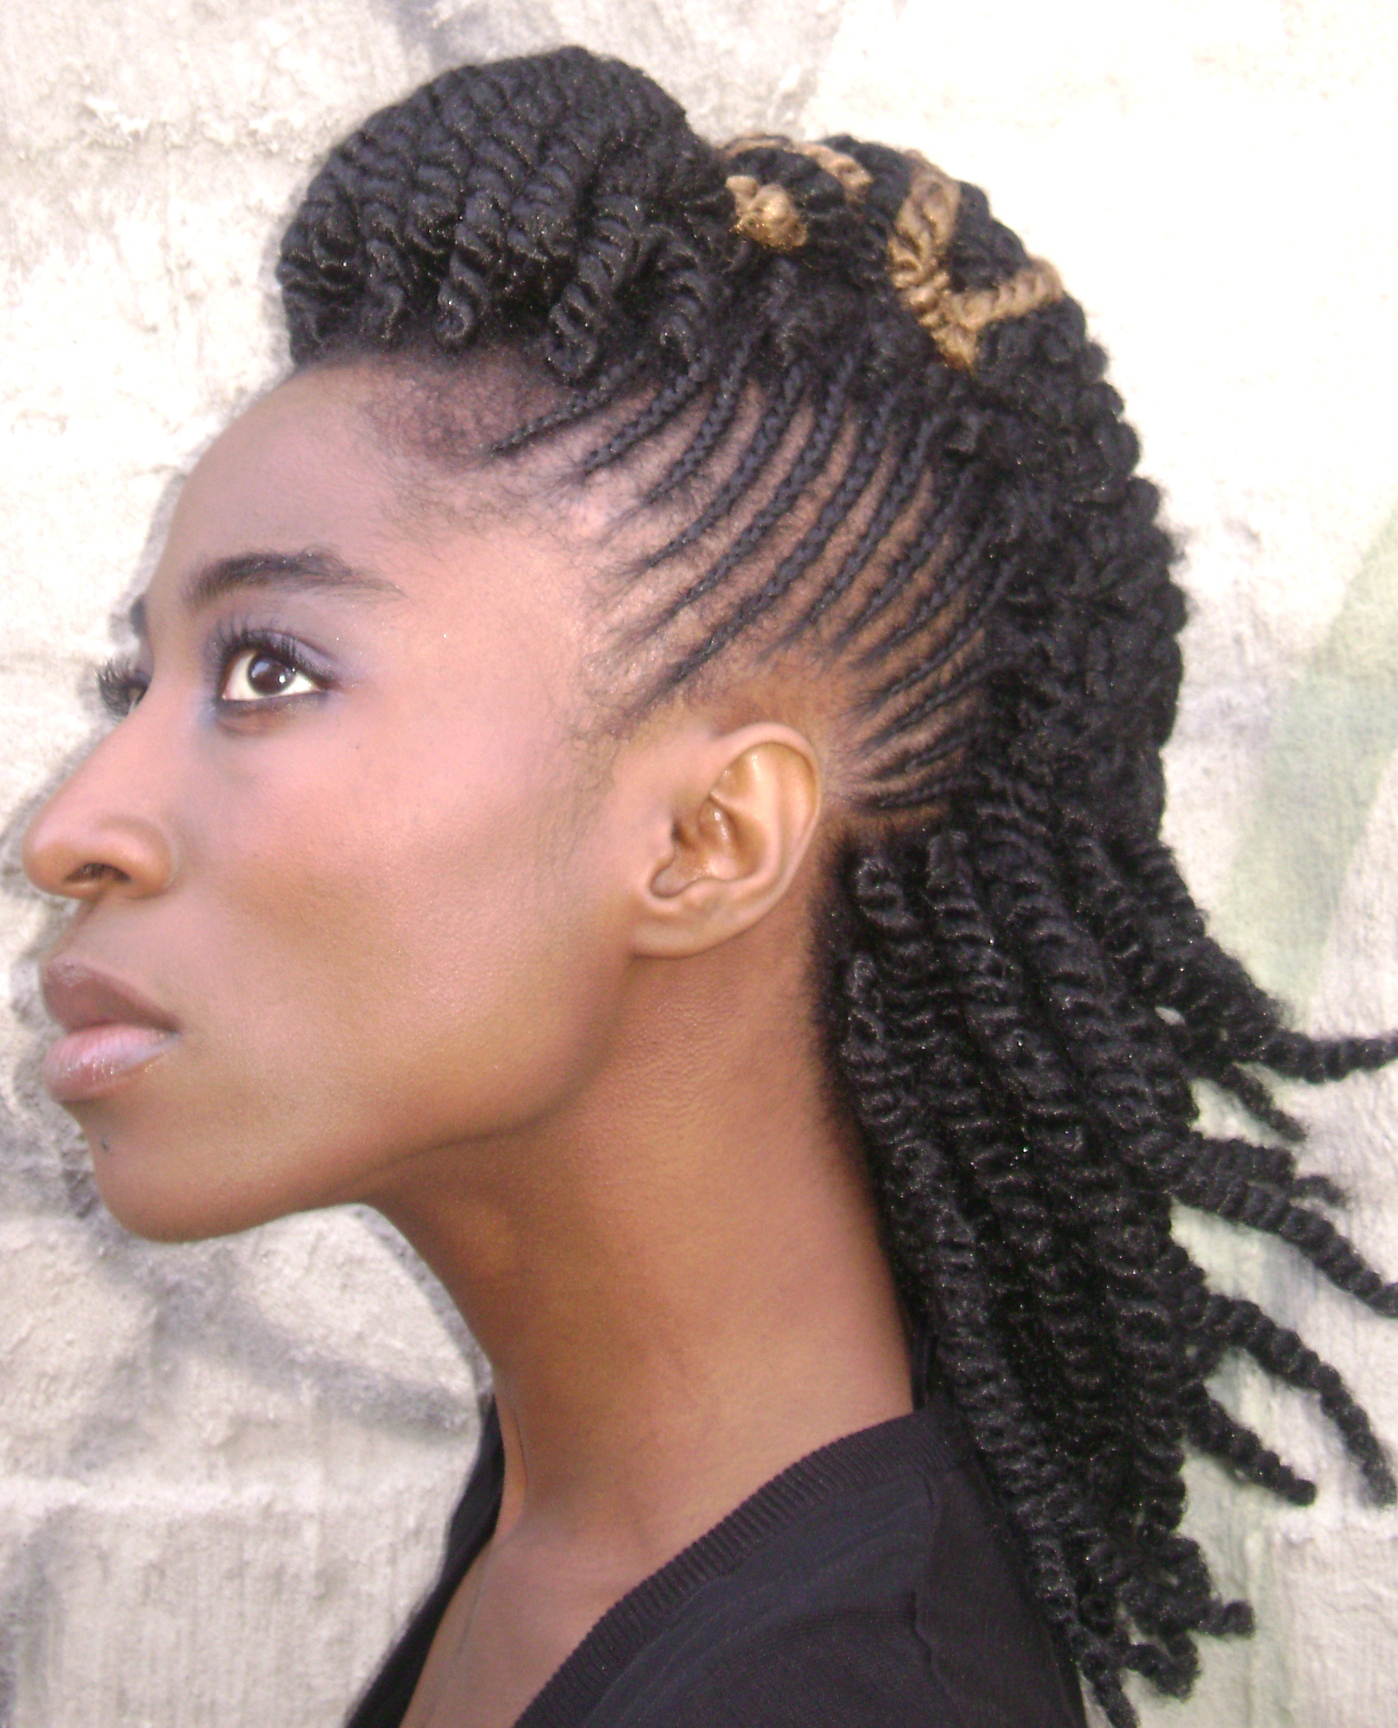 Twists braids hairstyle - thirstyroots.com: Black Hairstyles